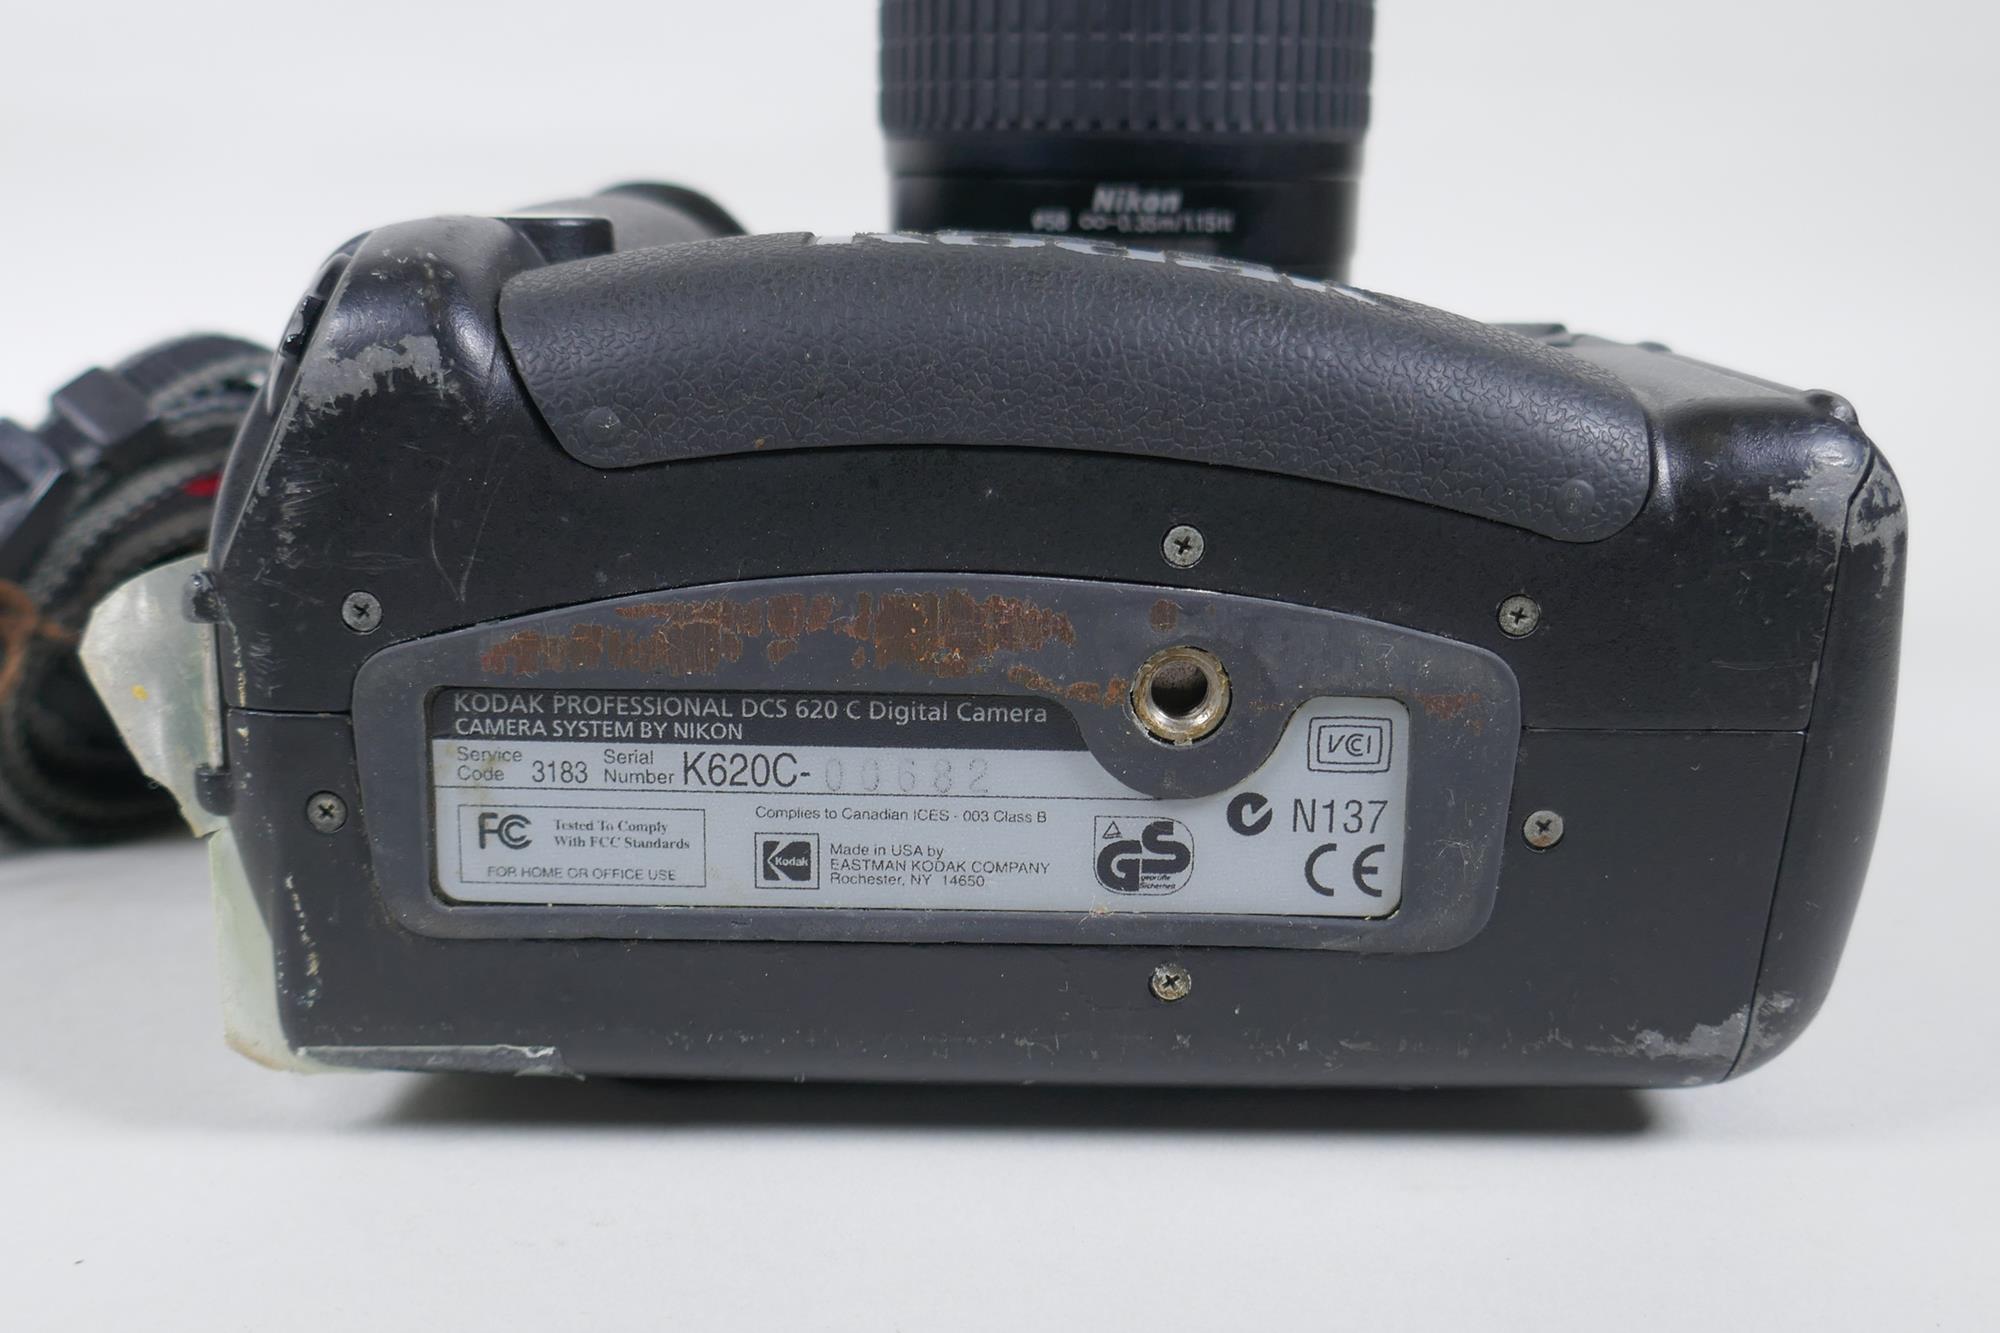 A Nikon F5 Kodak Professional DCS 620 digital camera, fitted with an AF Nikkor 28-80mm lens, - Image 6 of 8